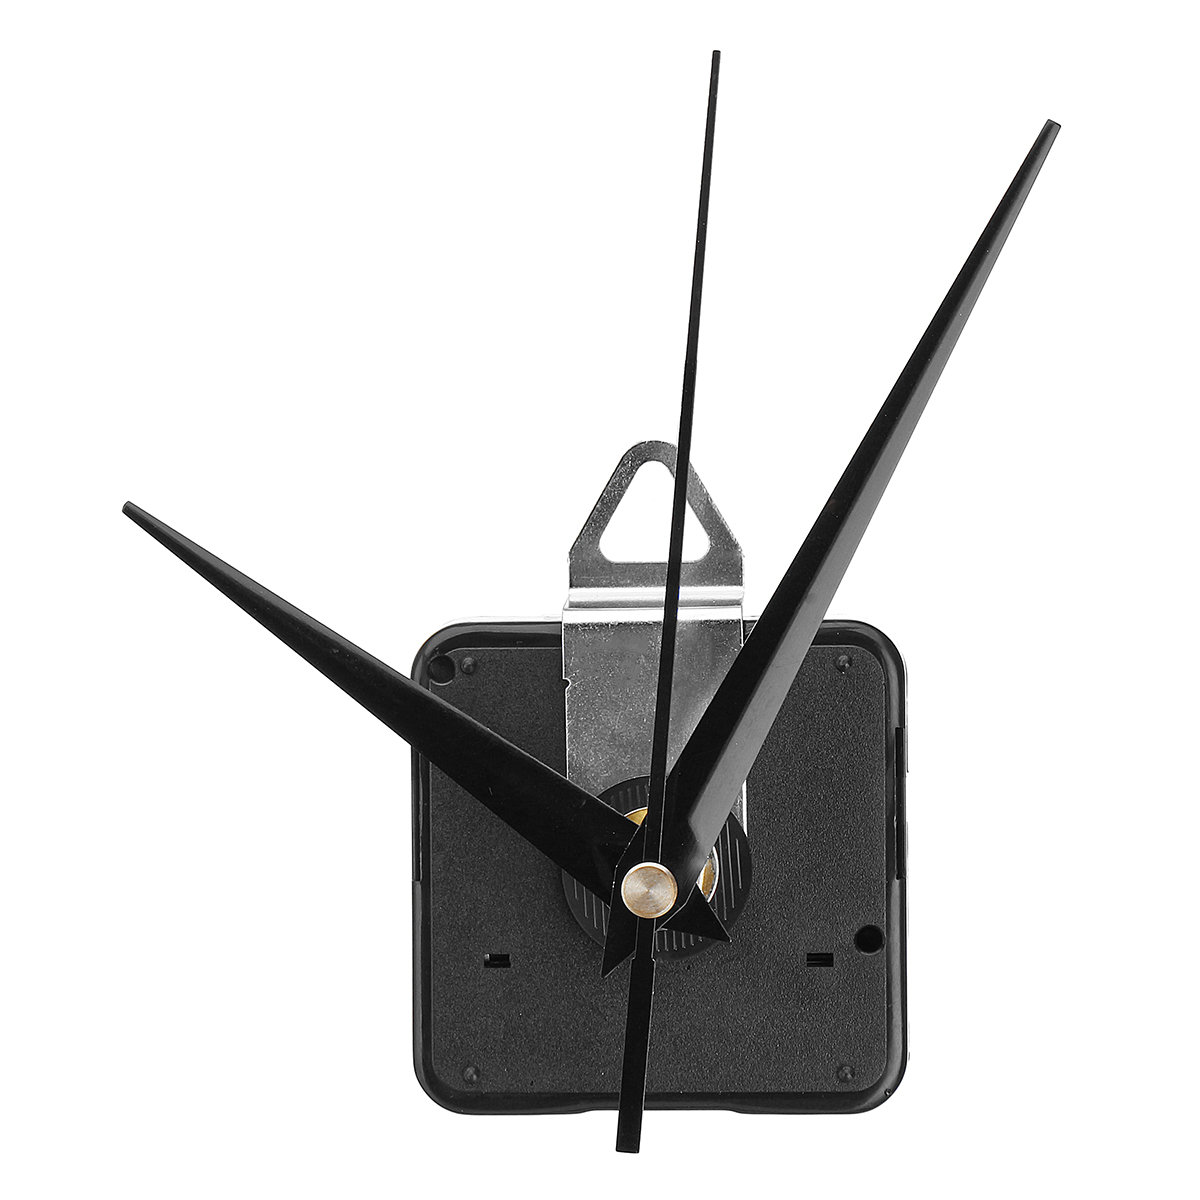 21mm-Quartz-Silent-Clock-Movement-Kit-Hour-Minute-Second-Without-Battery-1363029-3